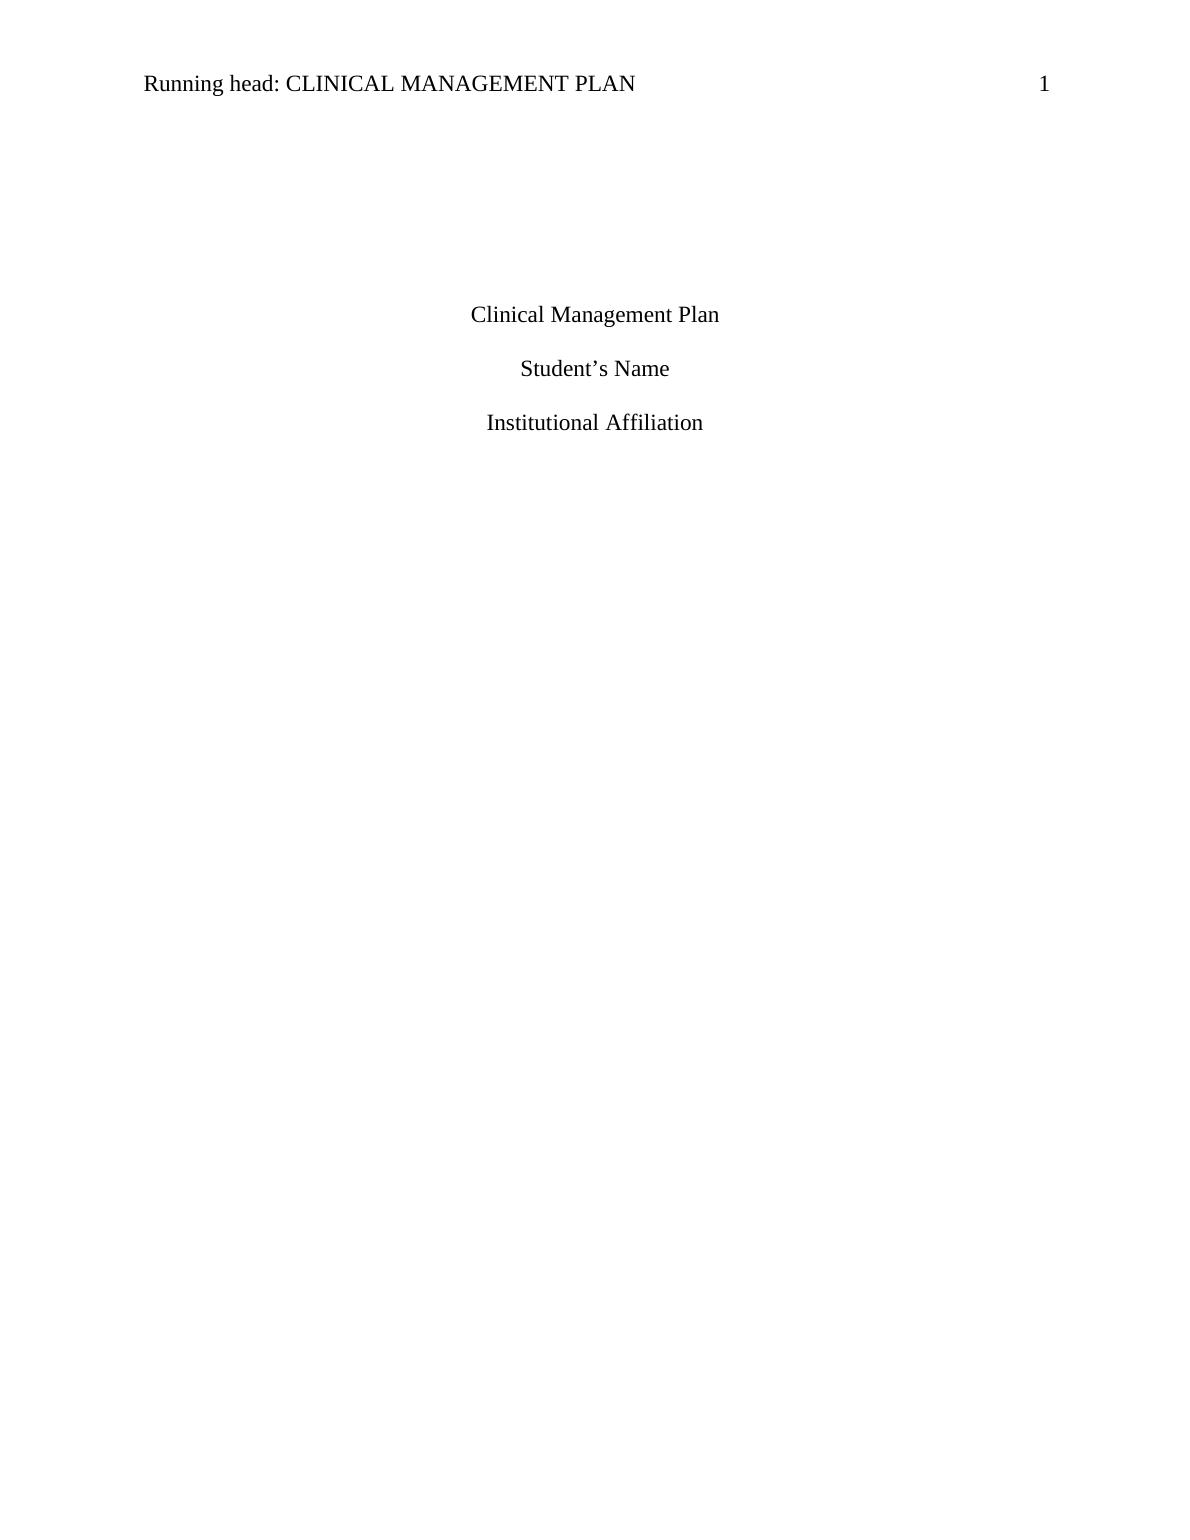 Clinical Management Plan PDF_1